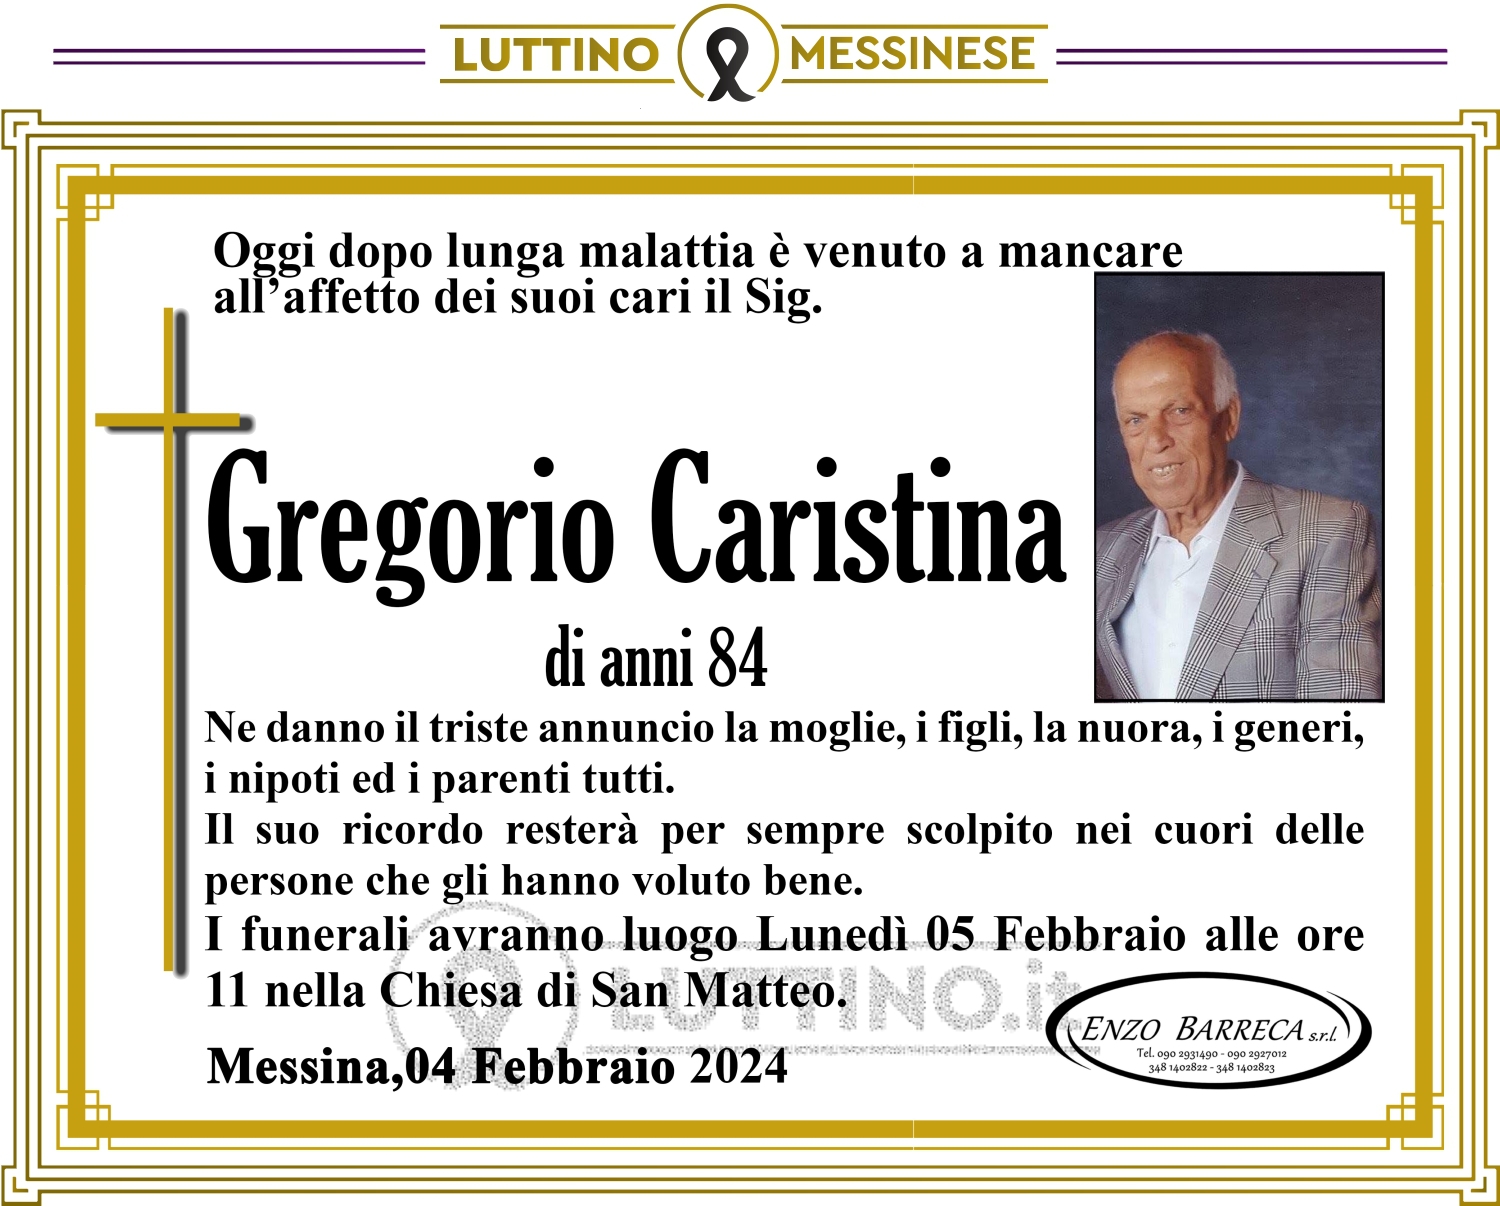 Gregorio Caristina